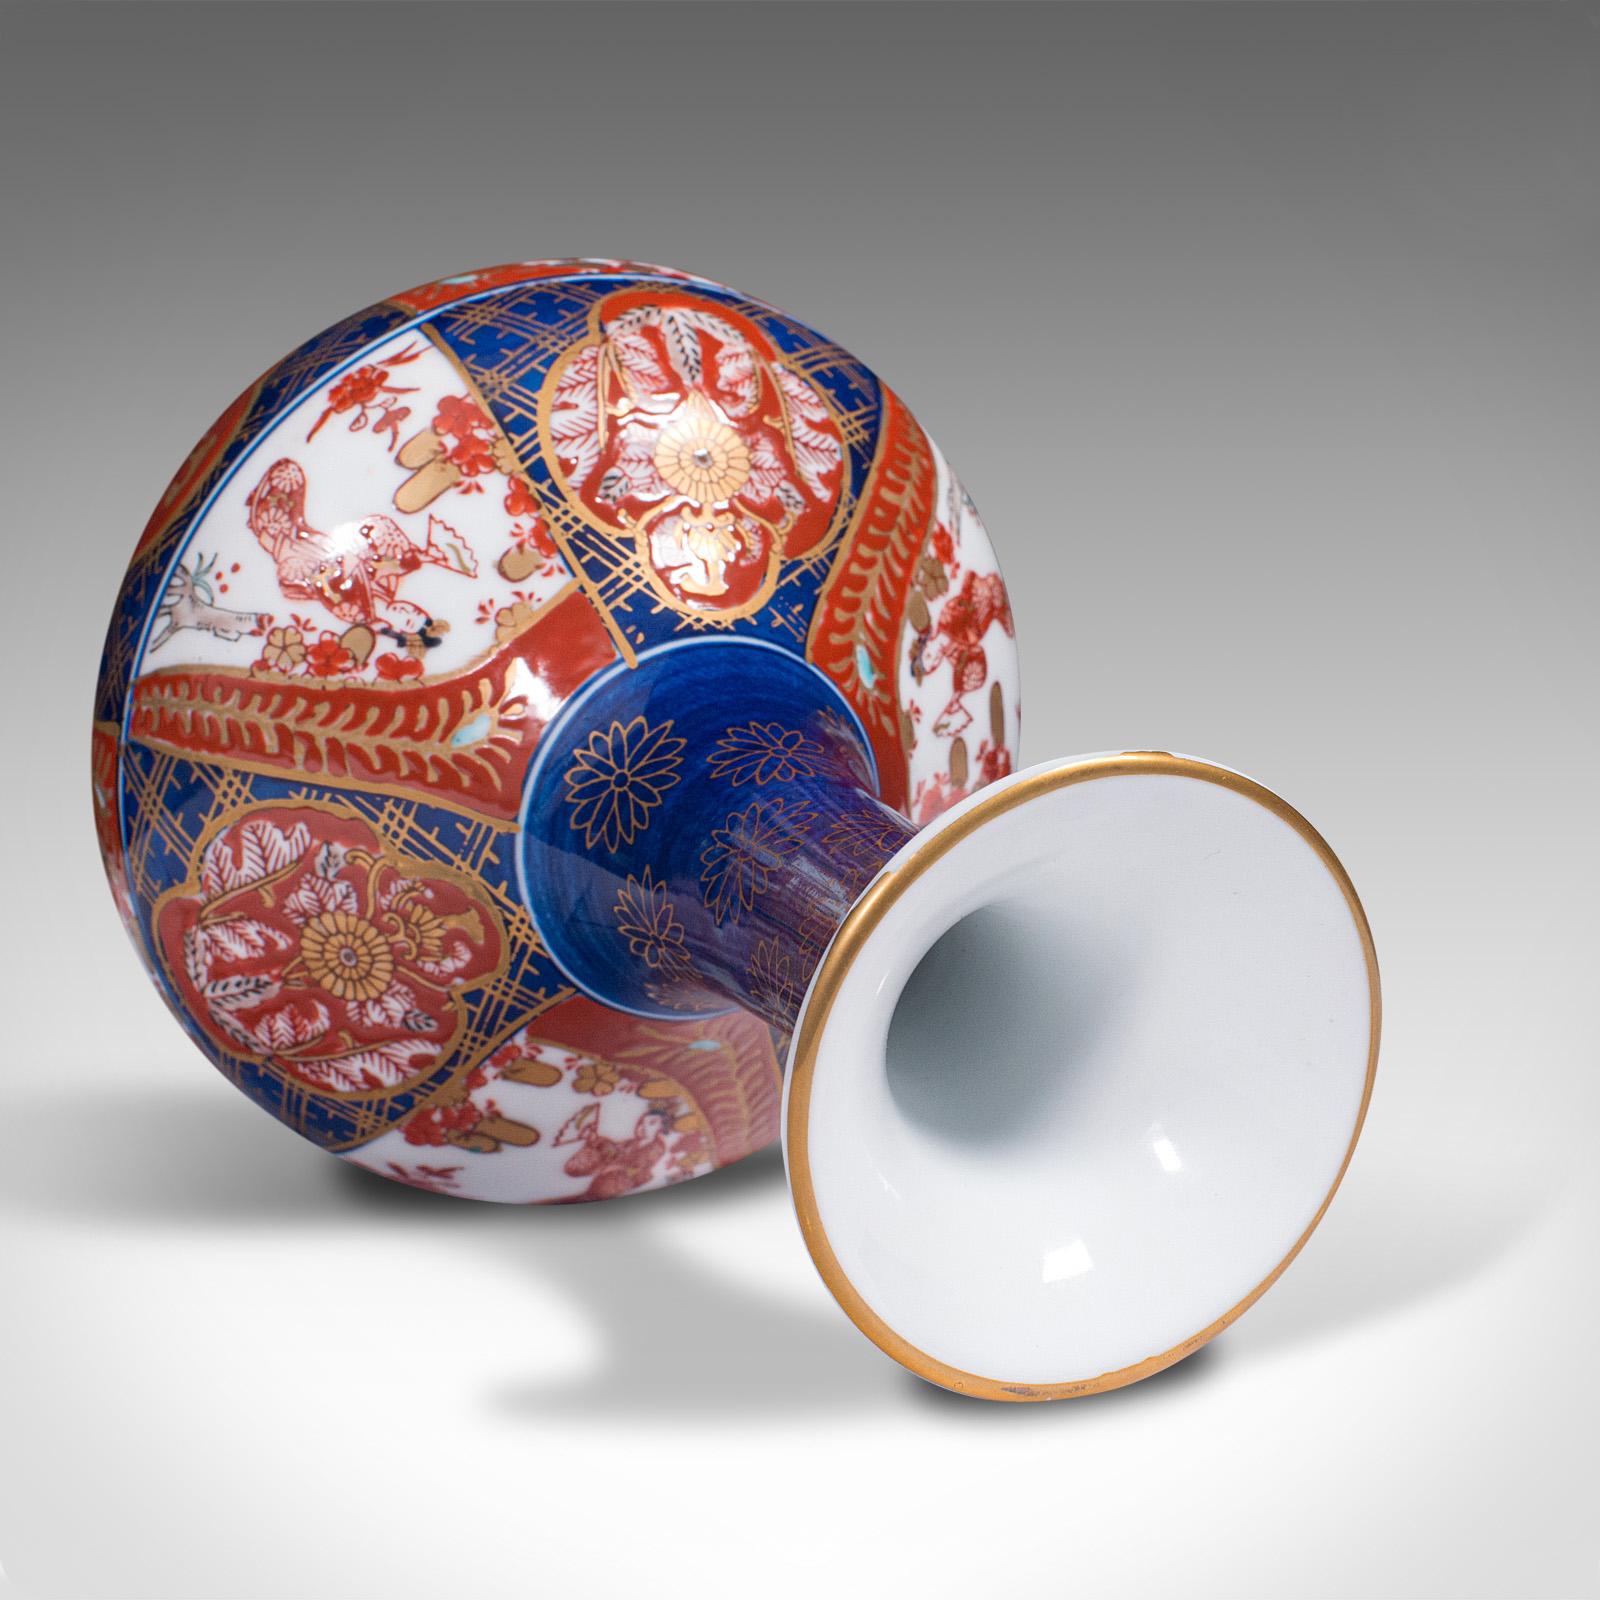 Vintage Imari Revival Flower Vase, Chinese, Ceramic, Decorative, Display Urn For Sale 6